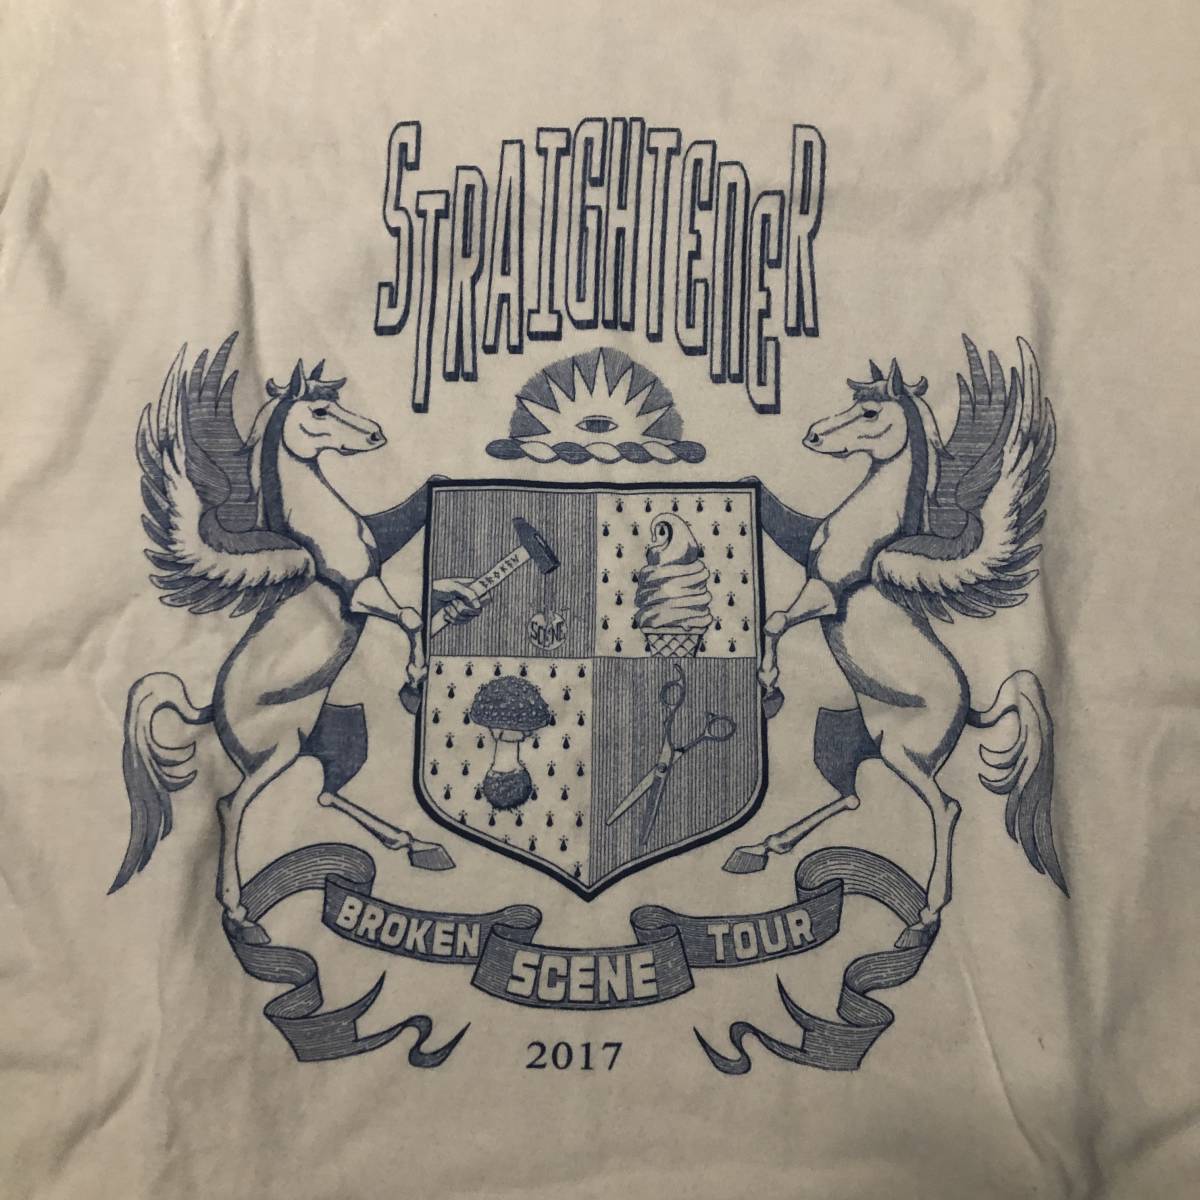 STRAIGHTENER ストレイテナー ホリエアツシ BROKEN SCENE TOUR 2017 TOUR Tシャツ サイズMの画像3